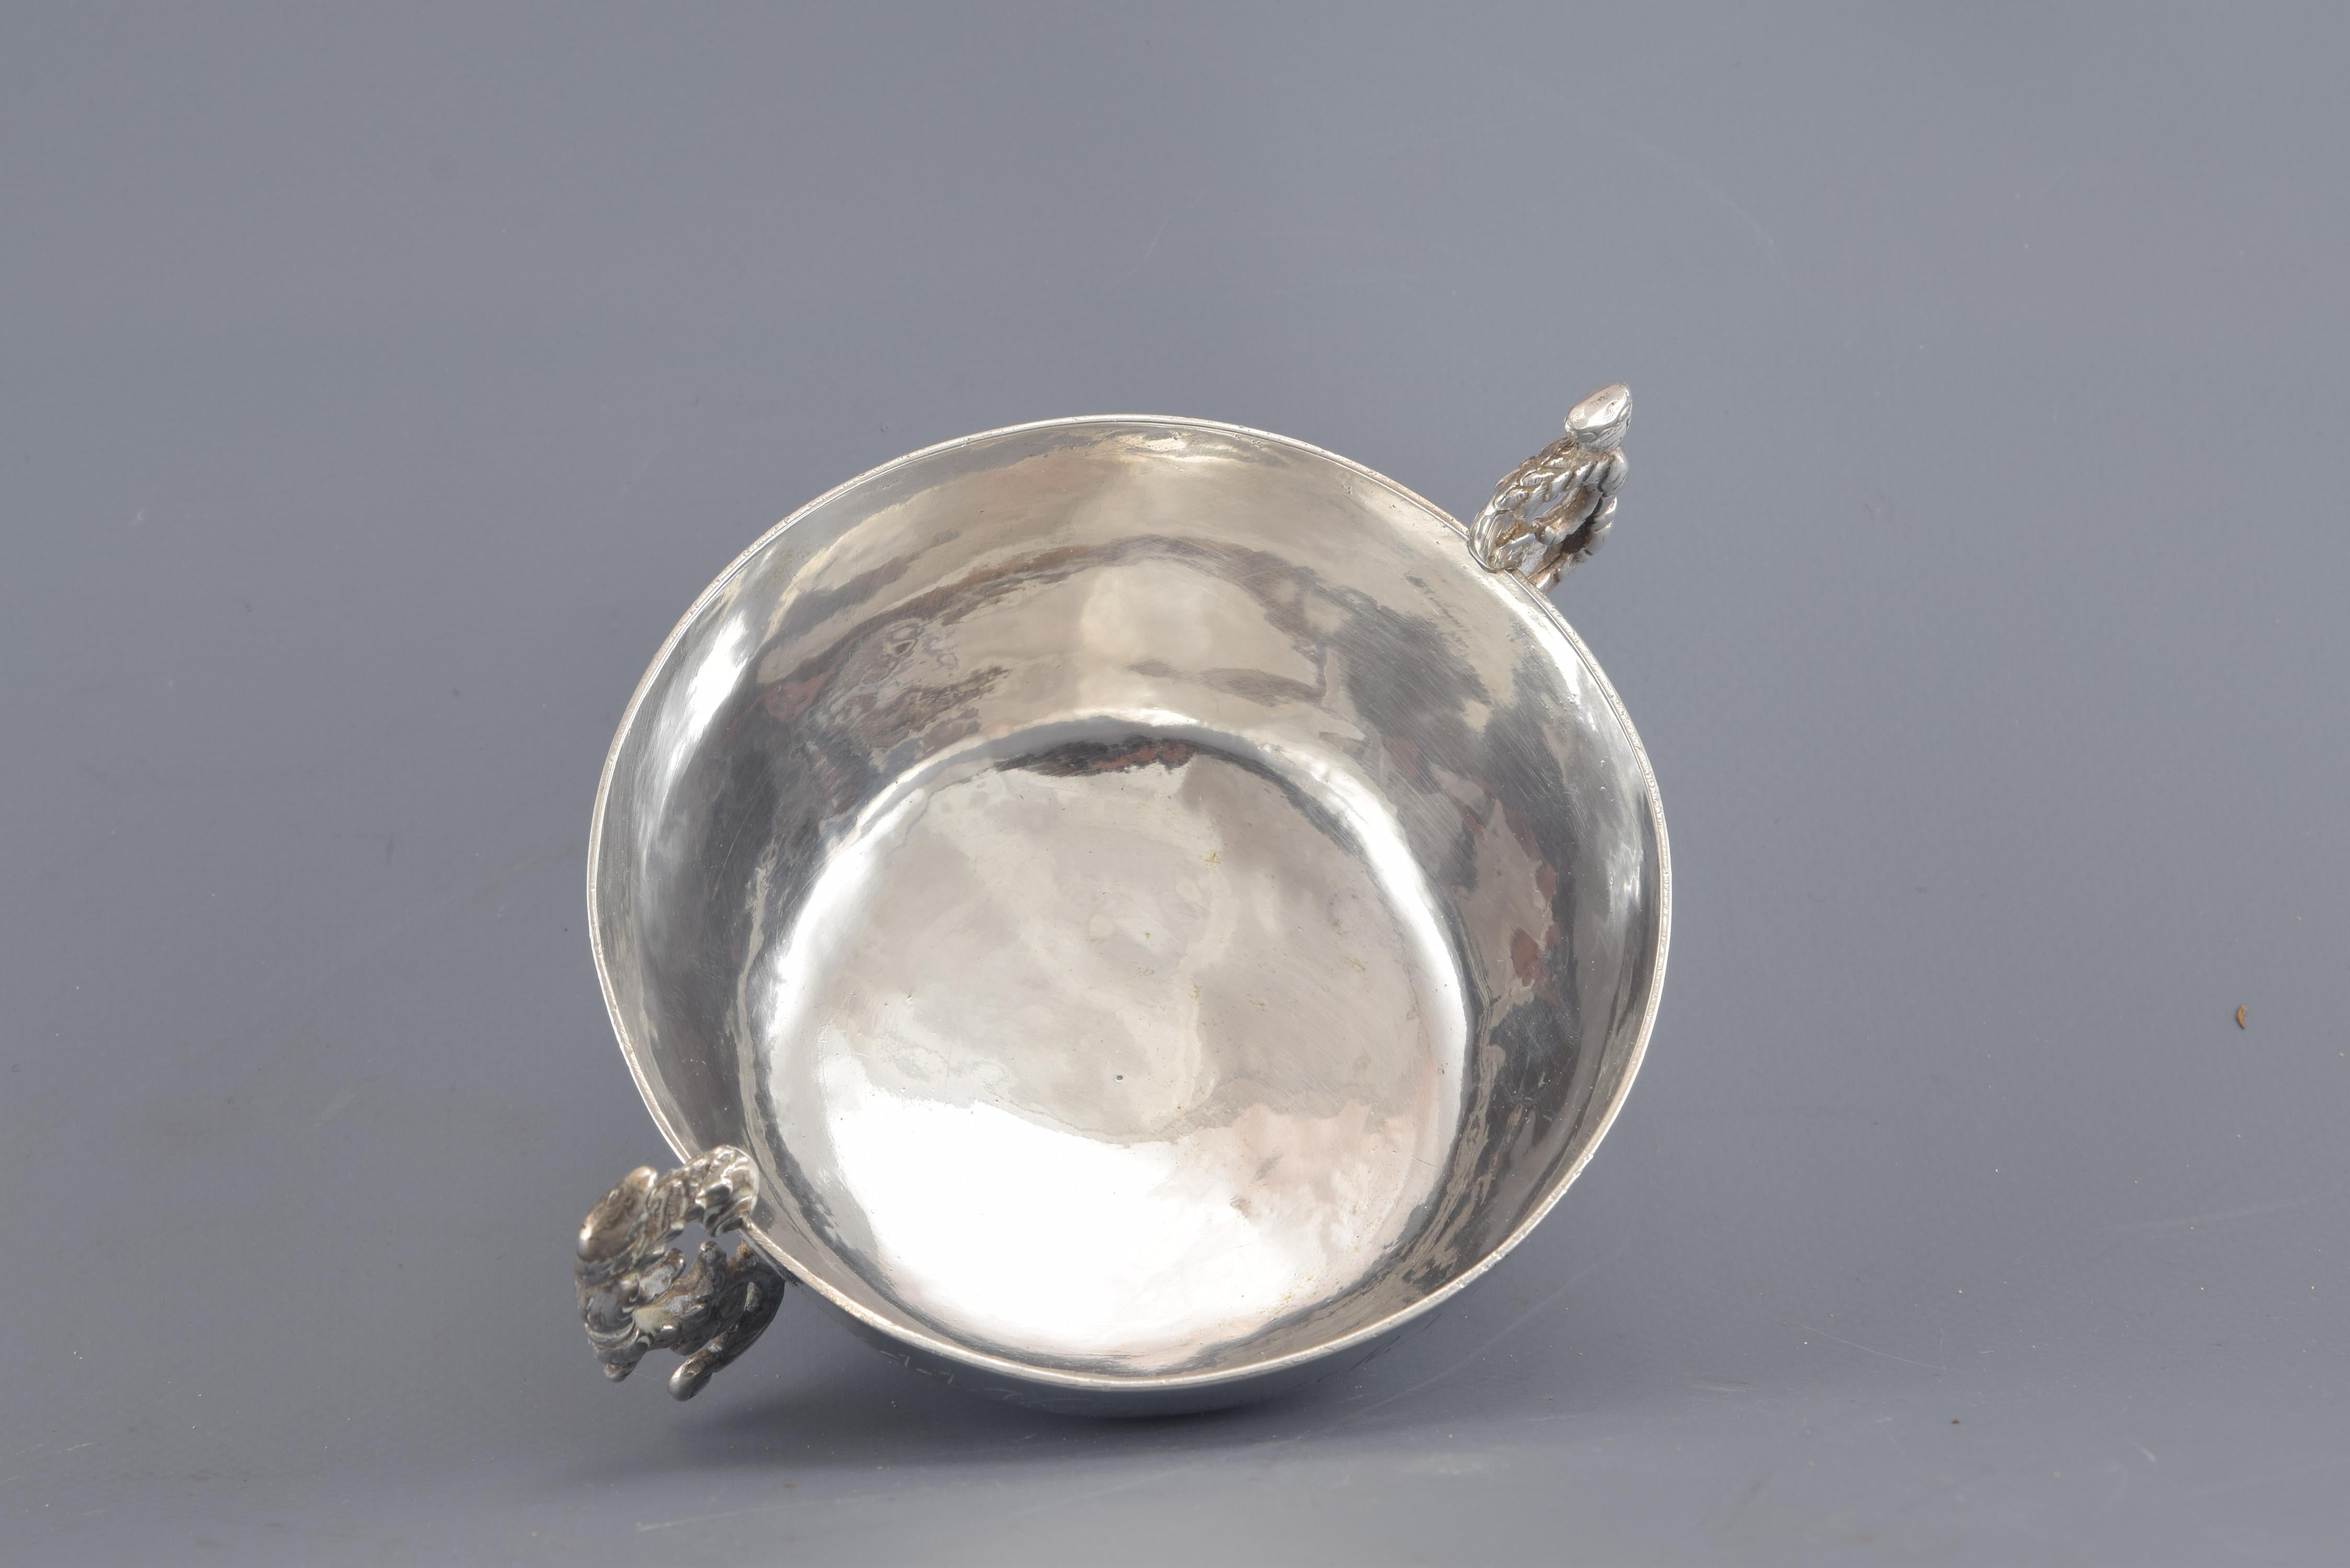 Milieu du XVIIIe siècle Tastevin Silver Tastevin, Tembladera, Espagne du Nord, Cantabrie, 1739 en vente